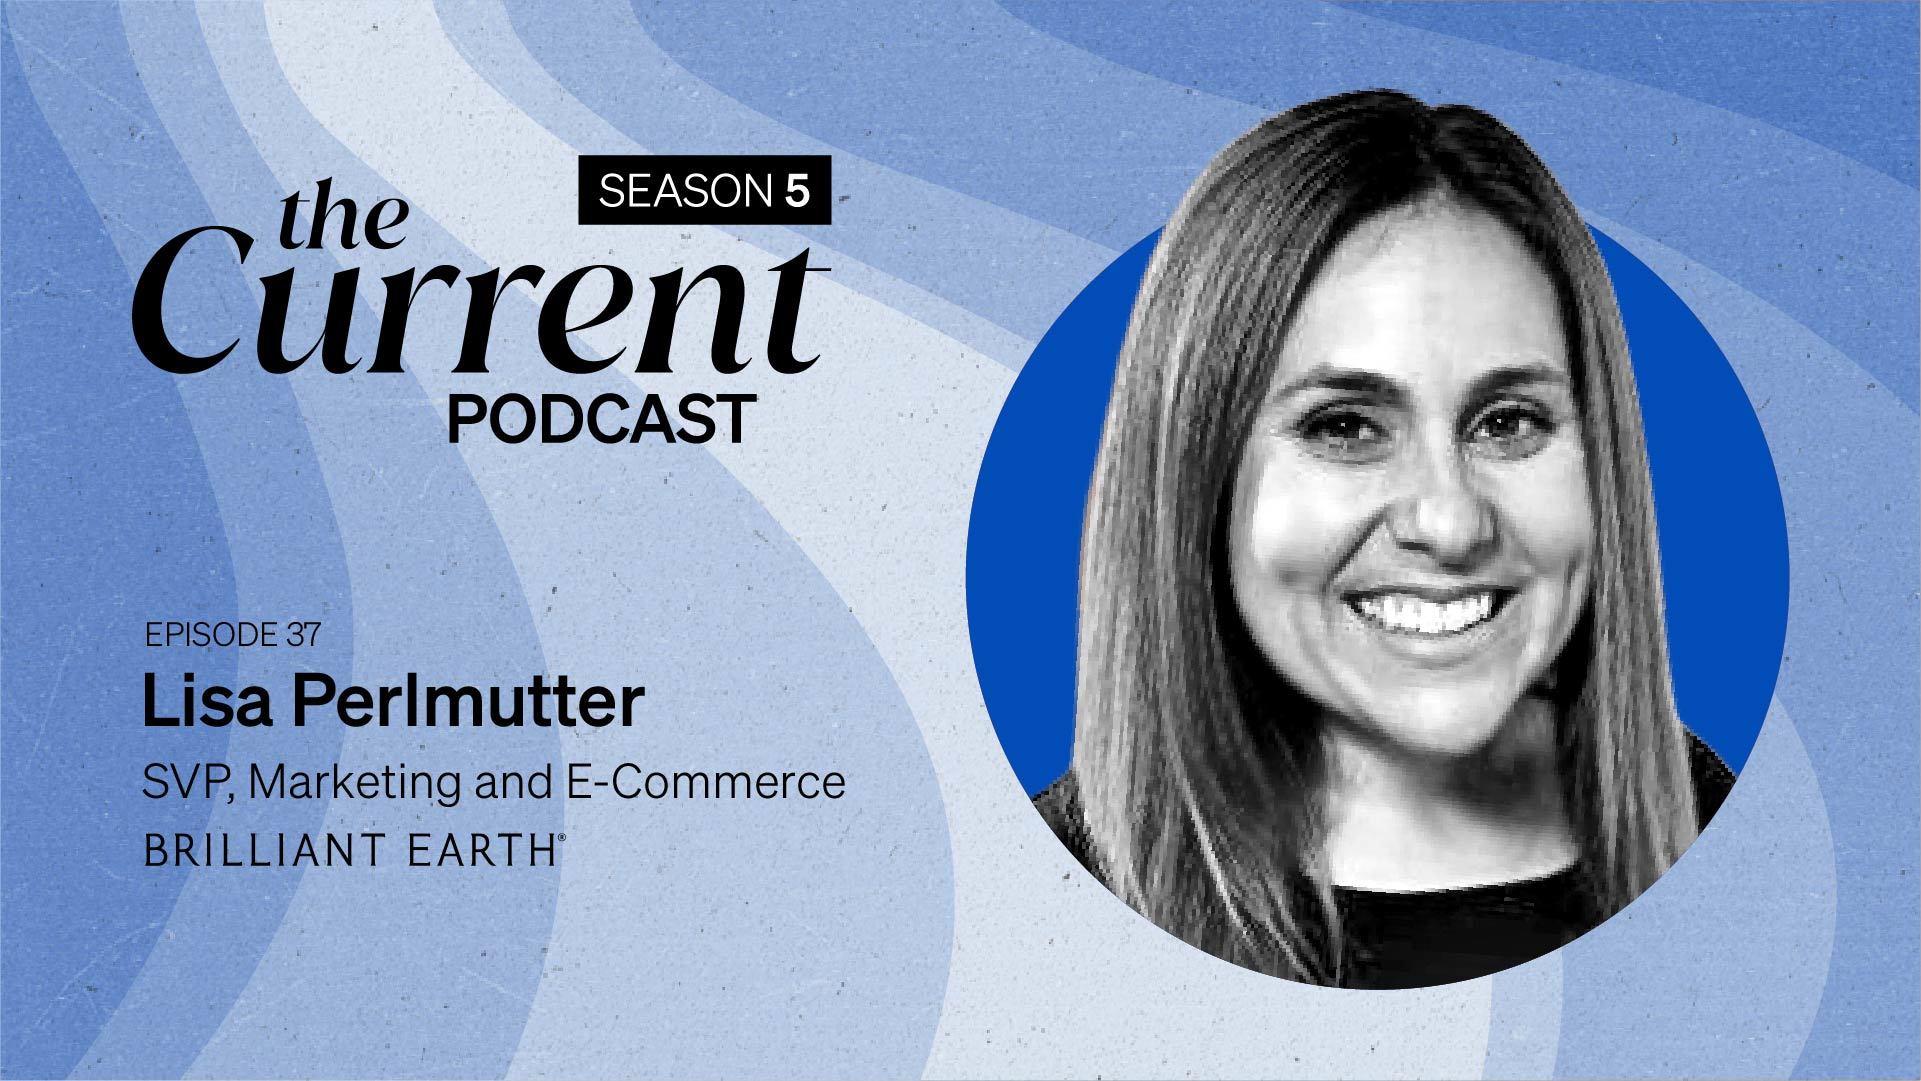 The Current Podcast, Season 5, Episode 37: Lisa Perlmutter, SVP, Marketing and E-Commerce, Brilliant Earth